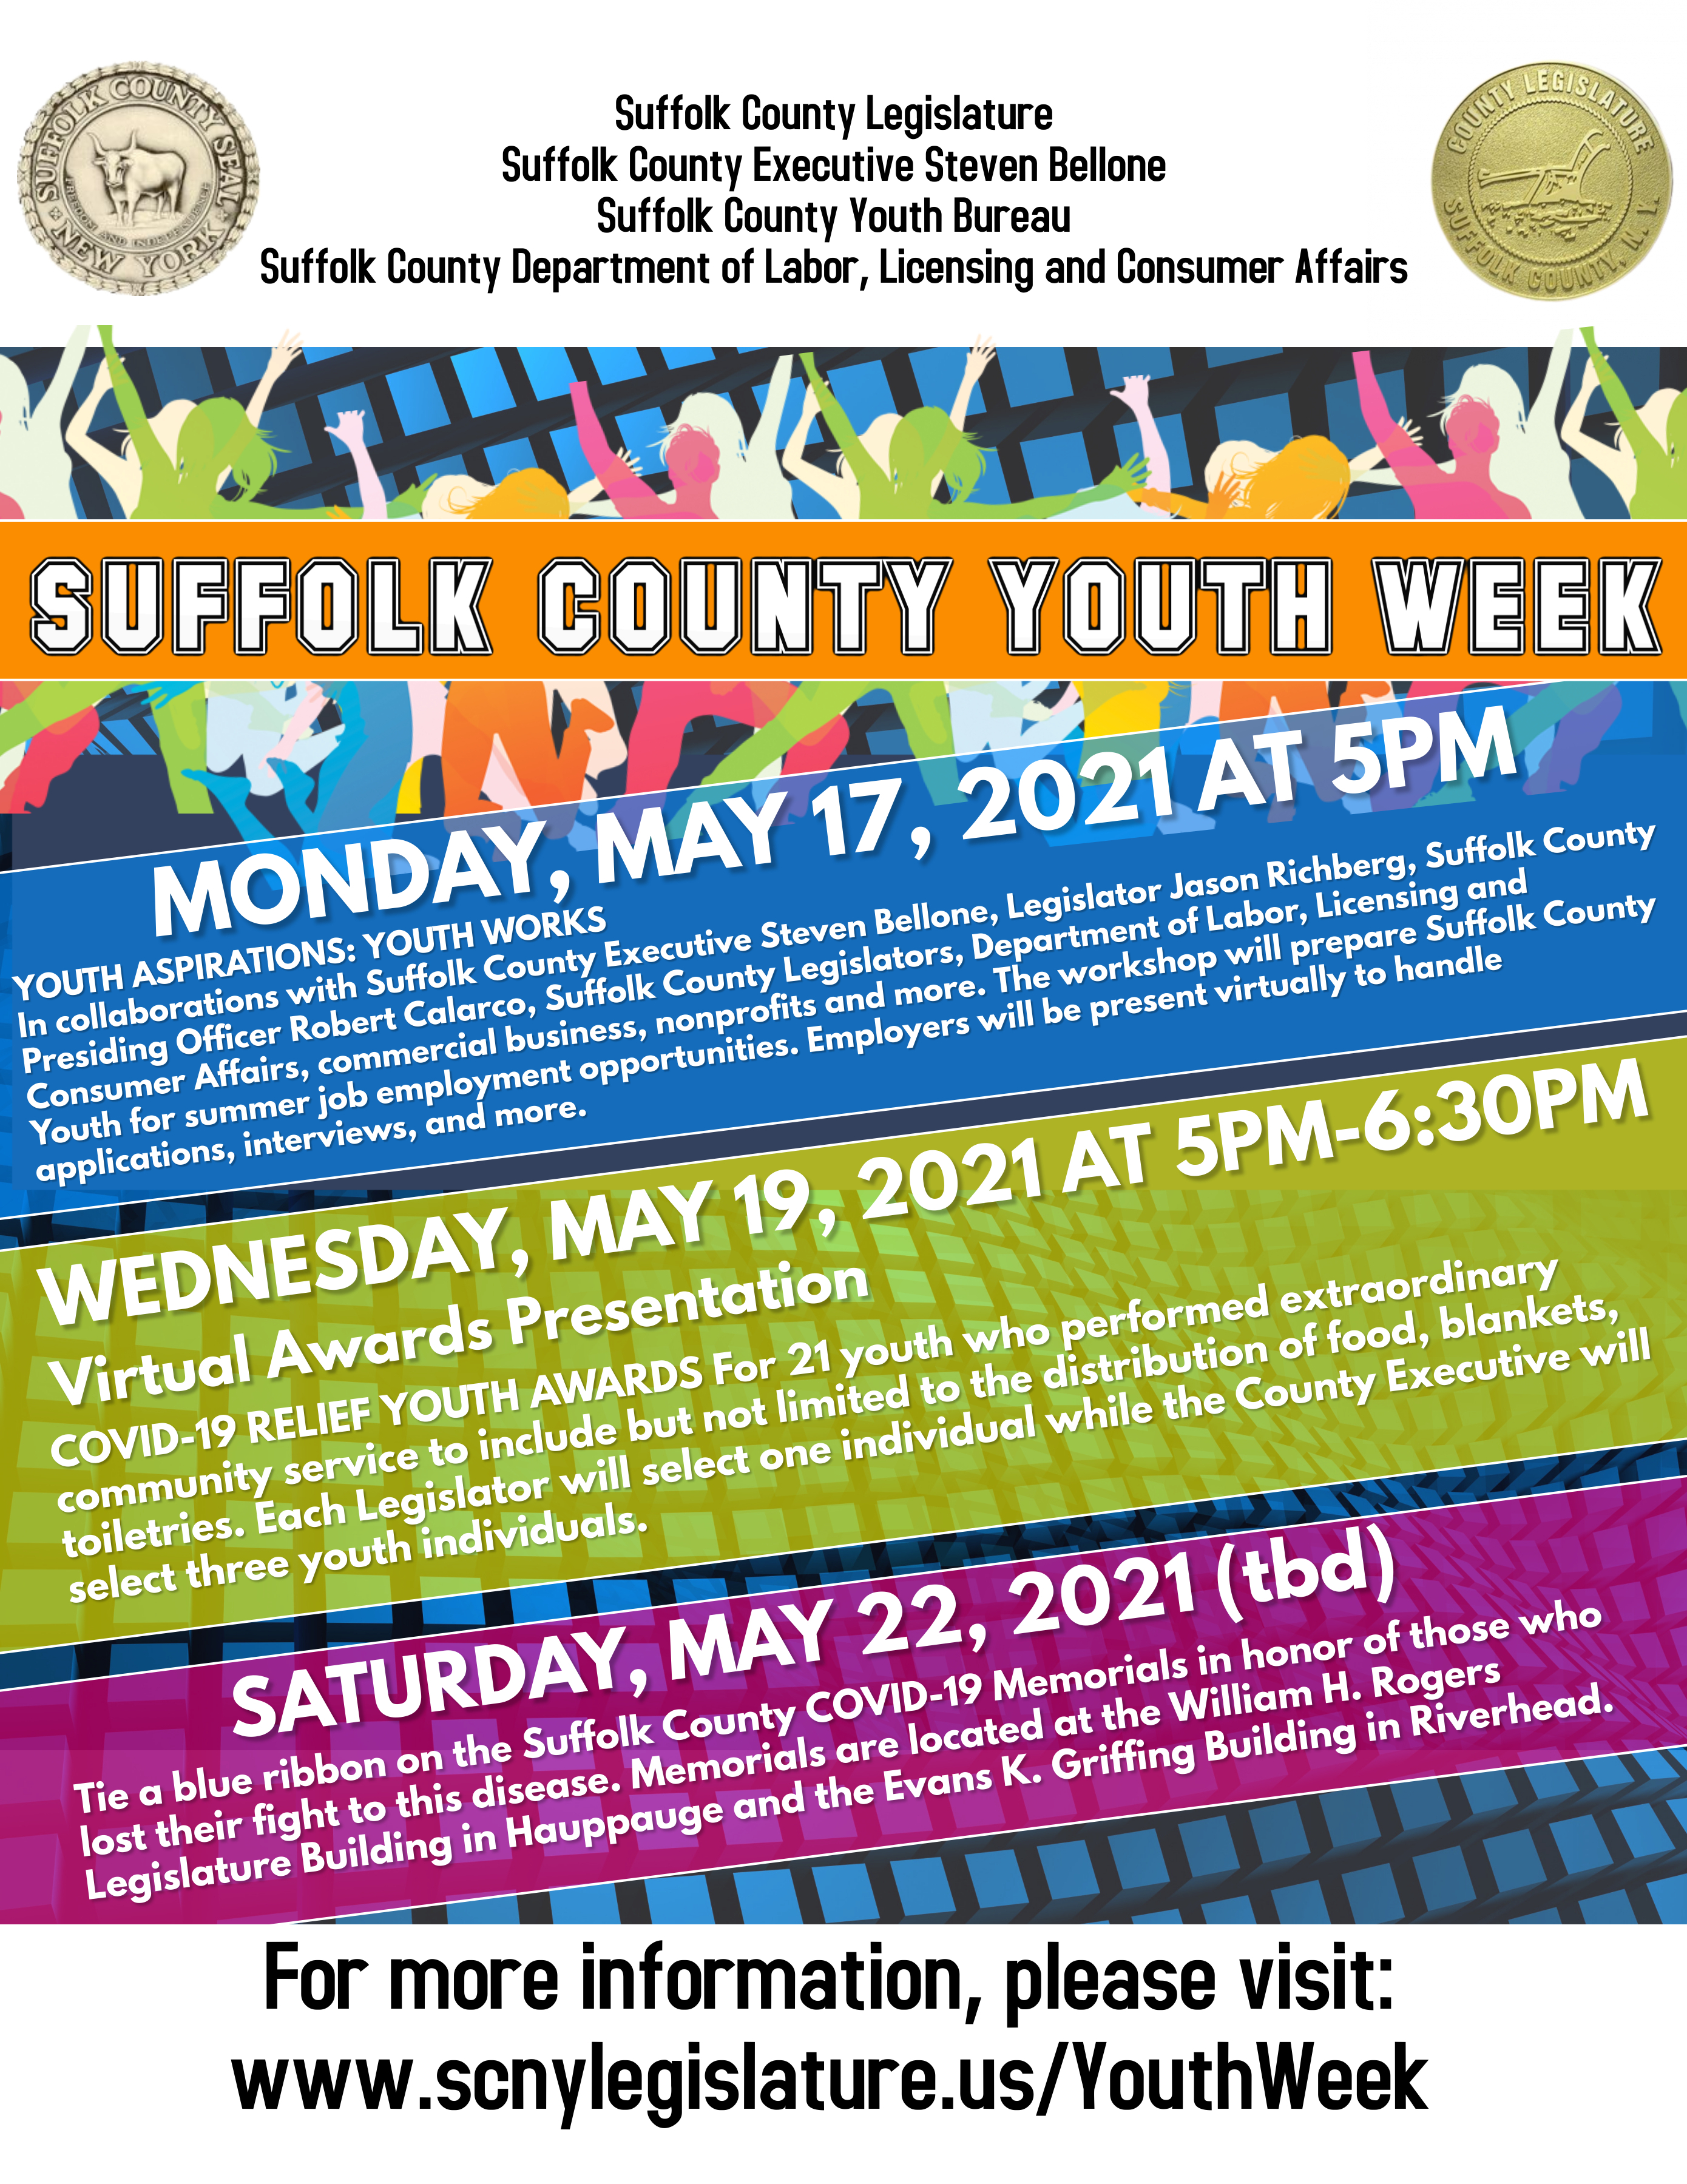 Suffolk County Youth Week program information